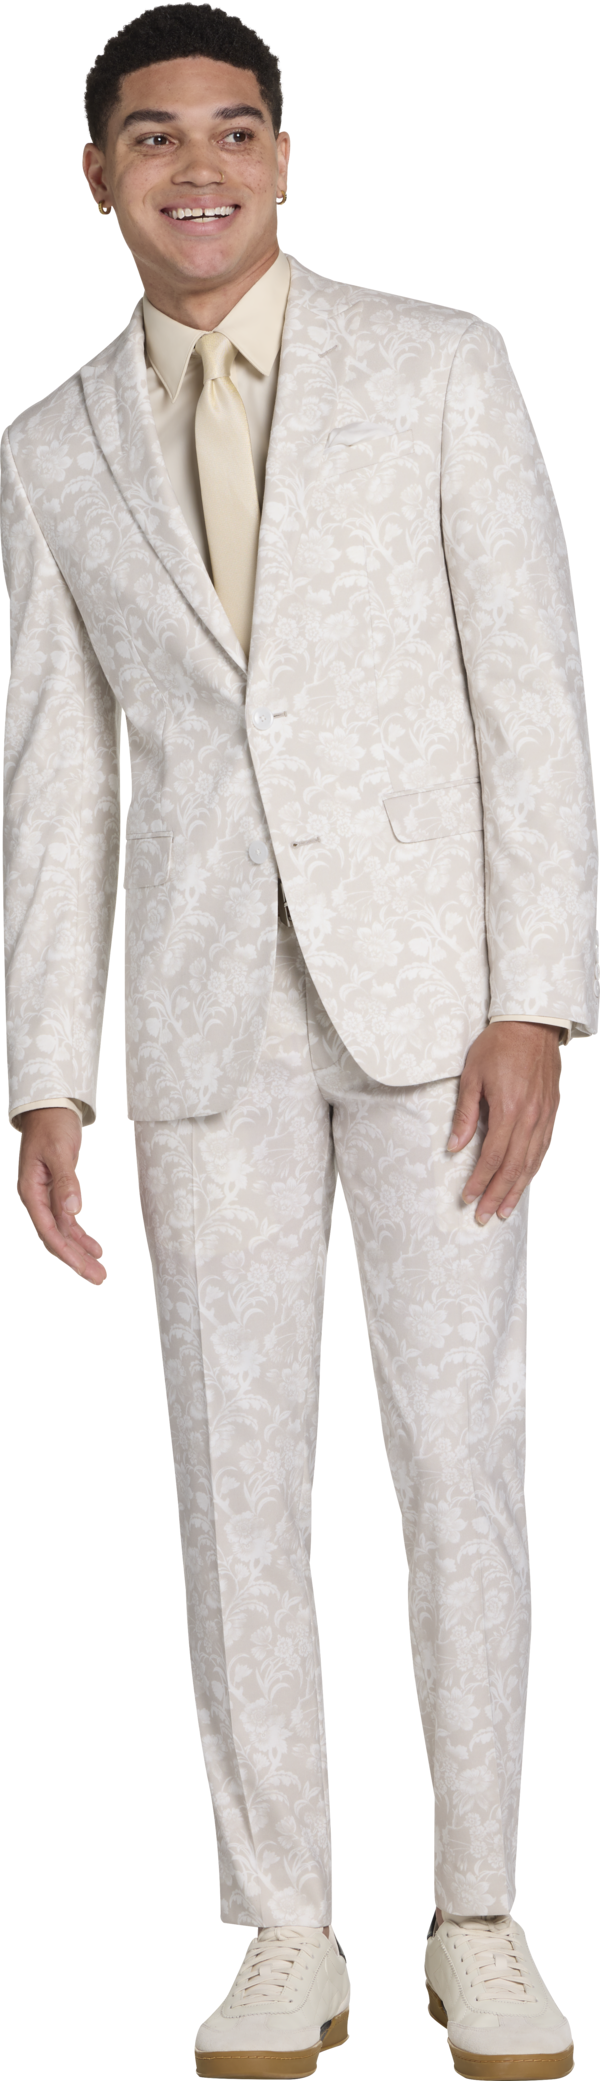 Egara Skinny Fit Peak Lapel Floral Men's Suit Separates Jacket Tan Floral - Size: 34 Short - Tan Floral - male